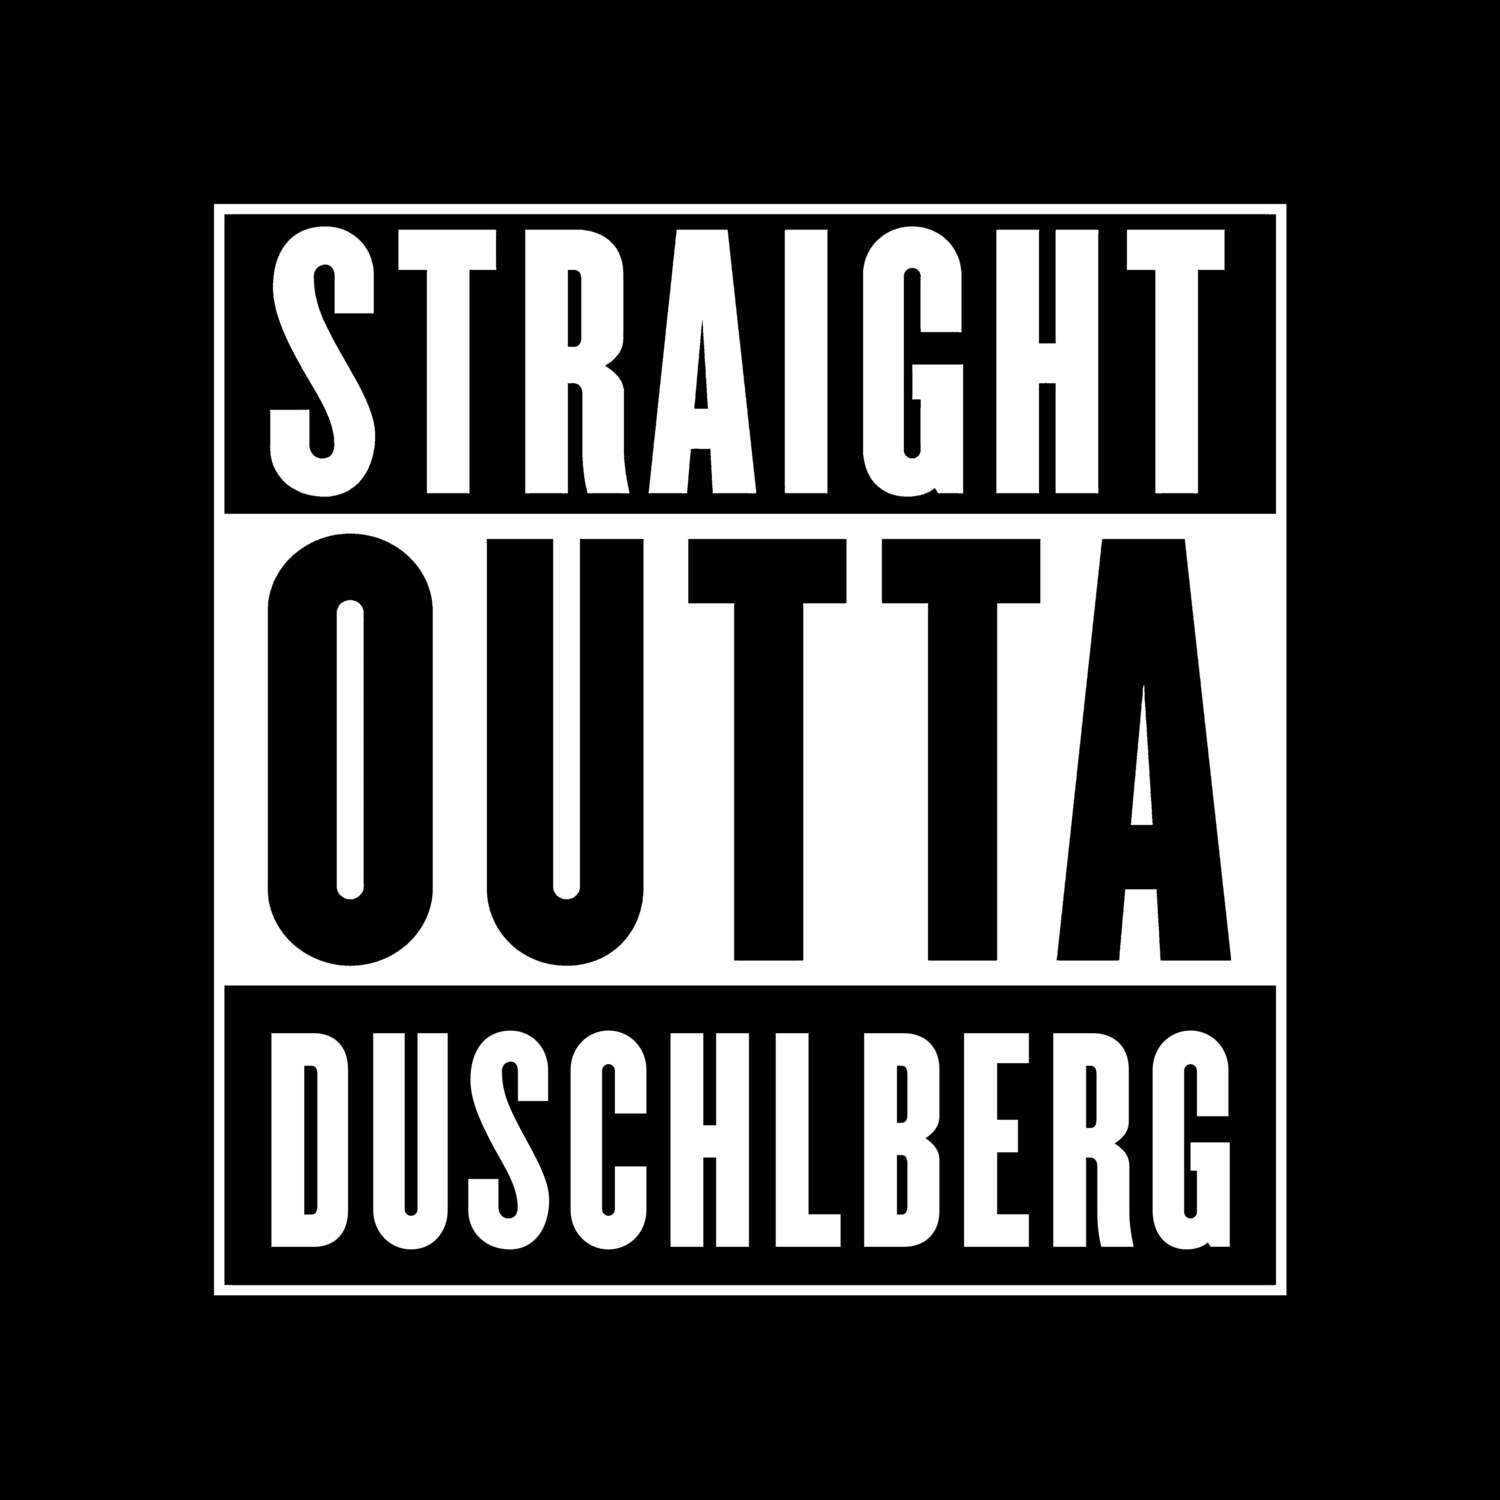 Duschlberg T-Shirt »Straight Outta«